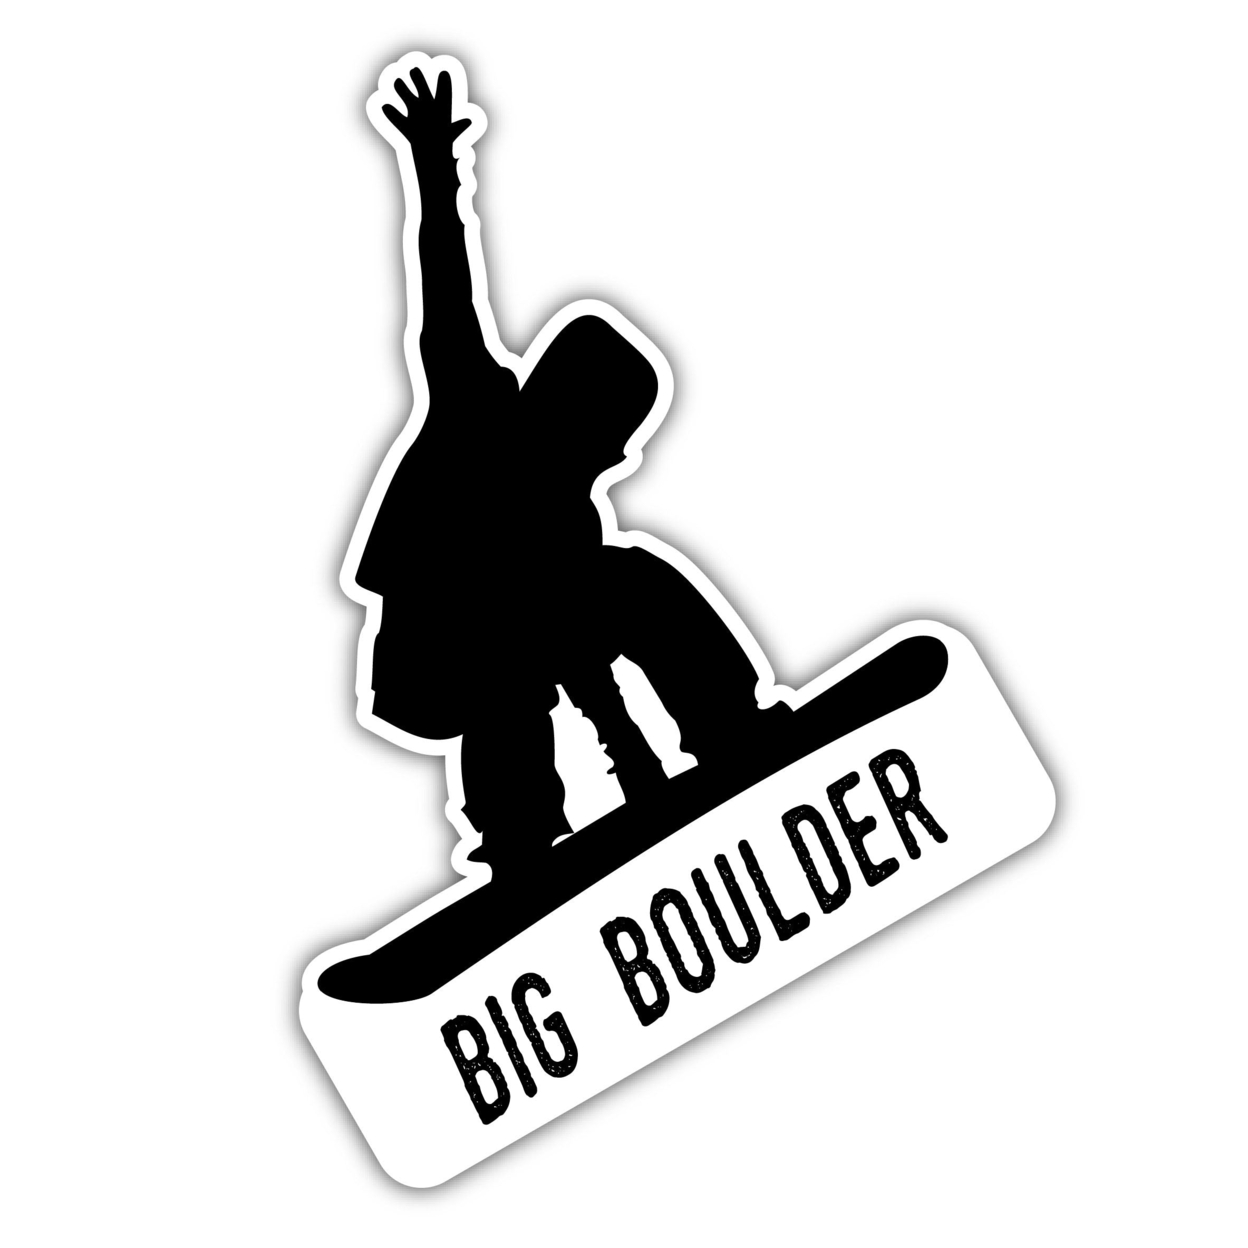 Big Boulder Pennsylvania Ski Adventures Souvenir 4 Inch Vinyl Decal Sticker Board Design